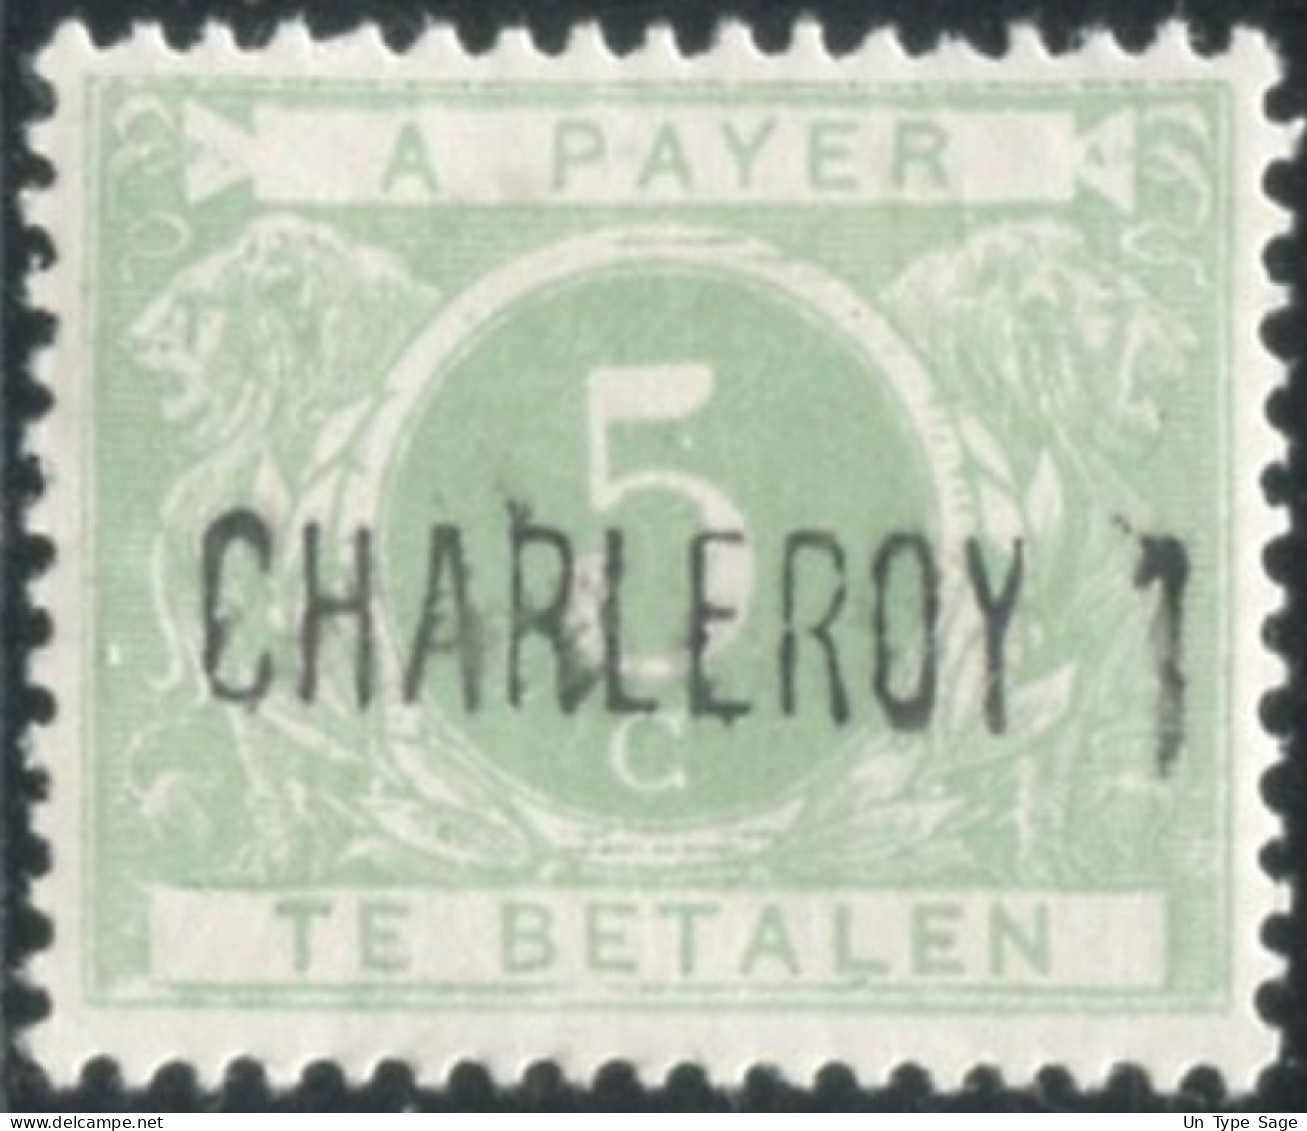 Belgique Timbre-taxe (TX) - Surcharge Locale De Distributeur - CHARLEROY 1 - (F995) - Timbres